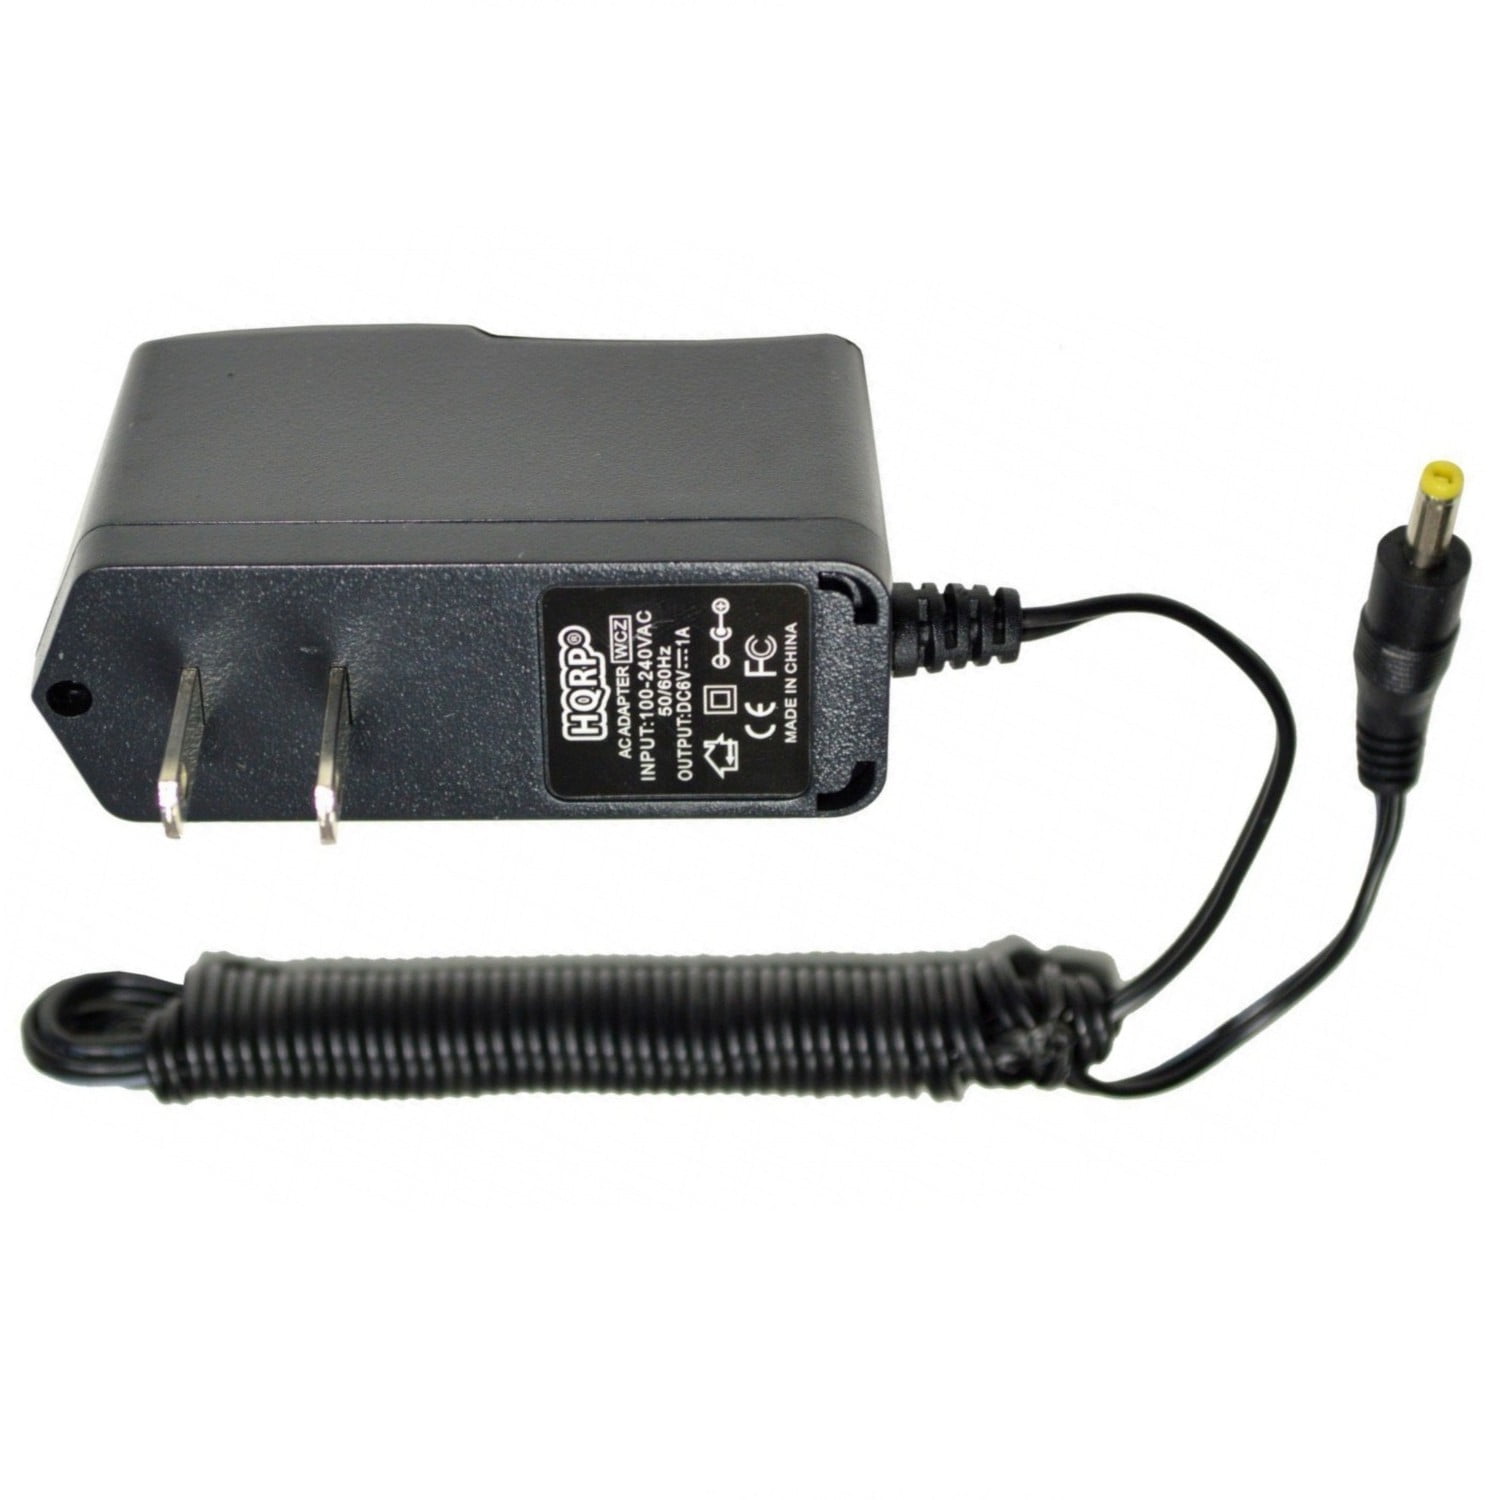 AC Adapter For Omron HEM-AC-J HEMAC-J HEMACJ Blood Pressure Monitor Power Mains 